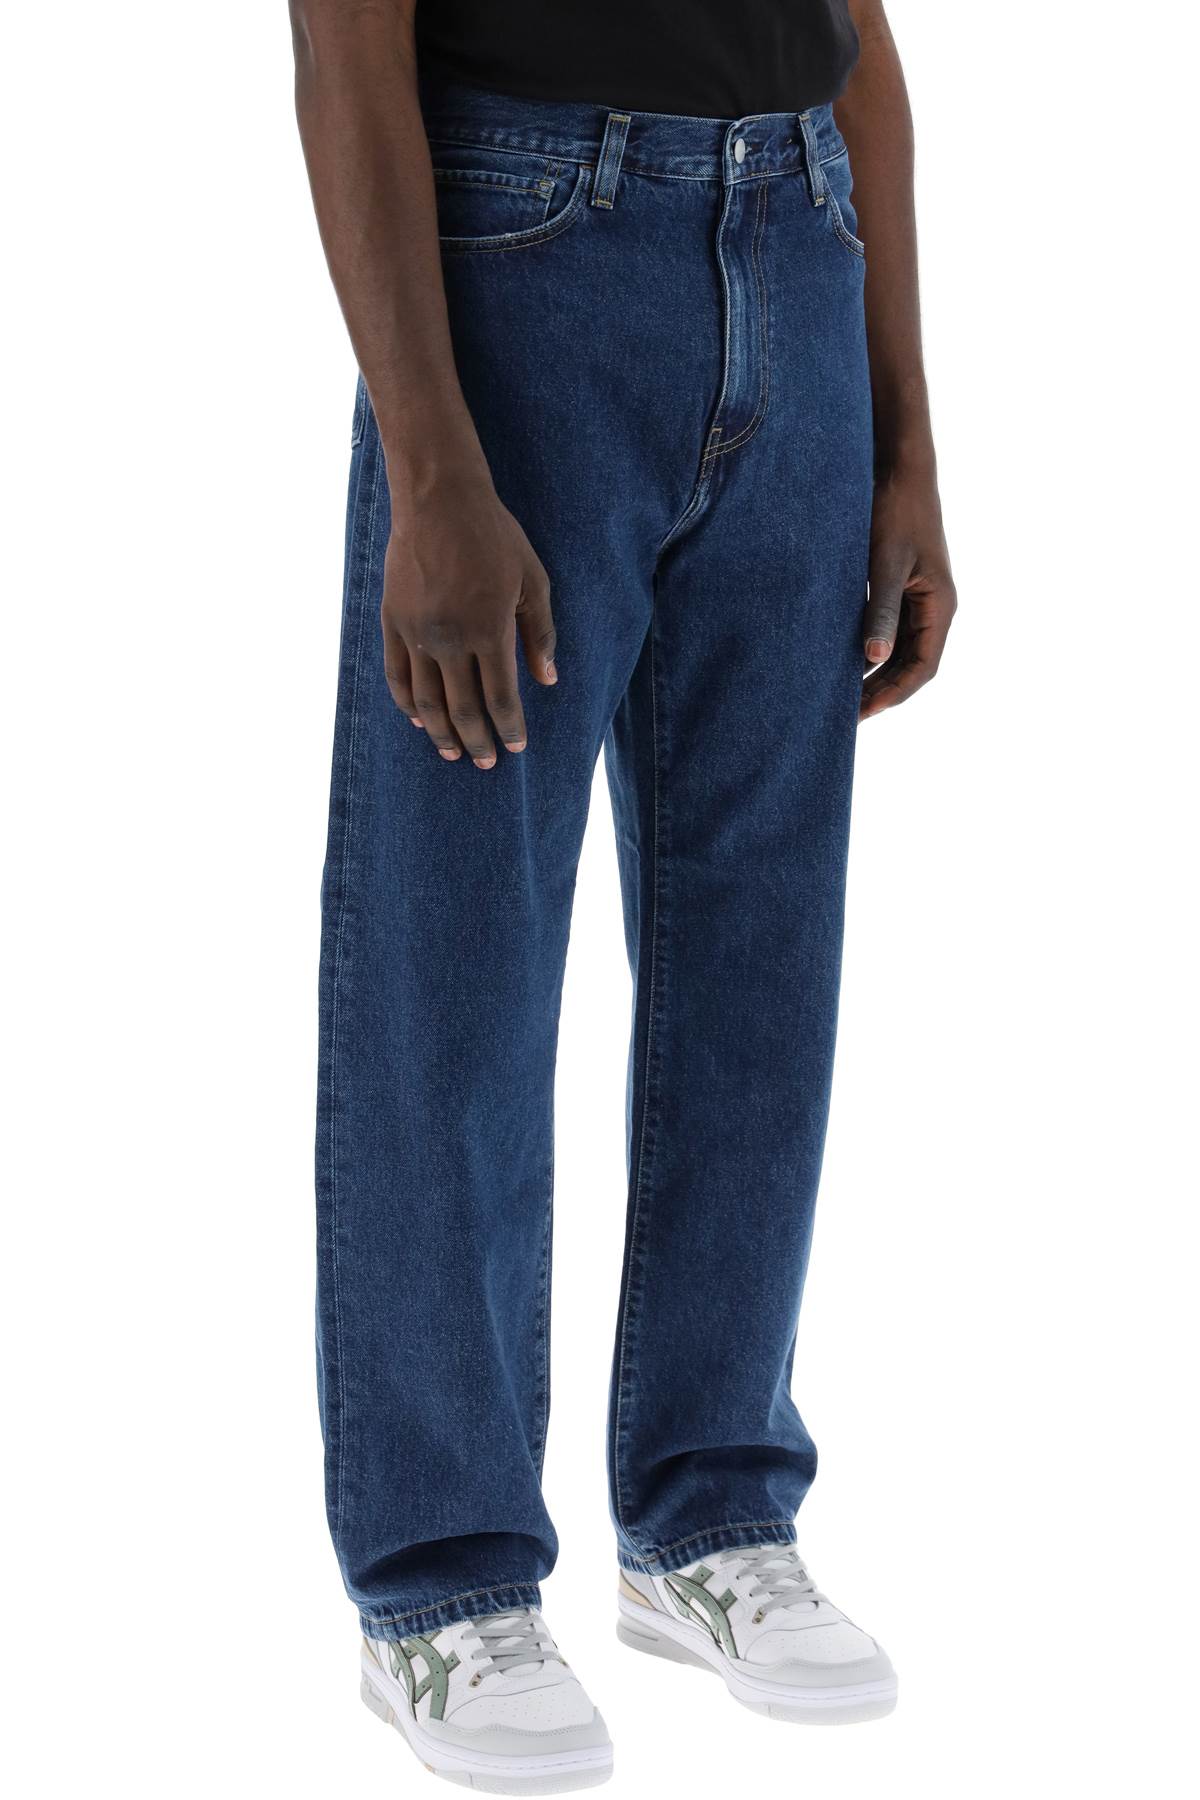 Carhartt Wip Landon Loose Fit Jeans   Blue